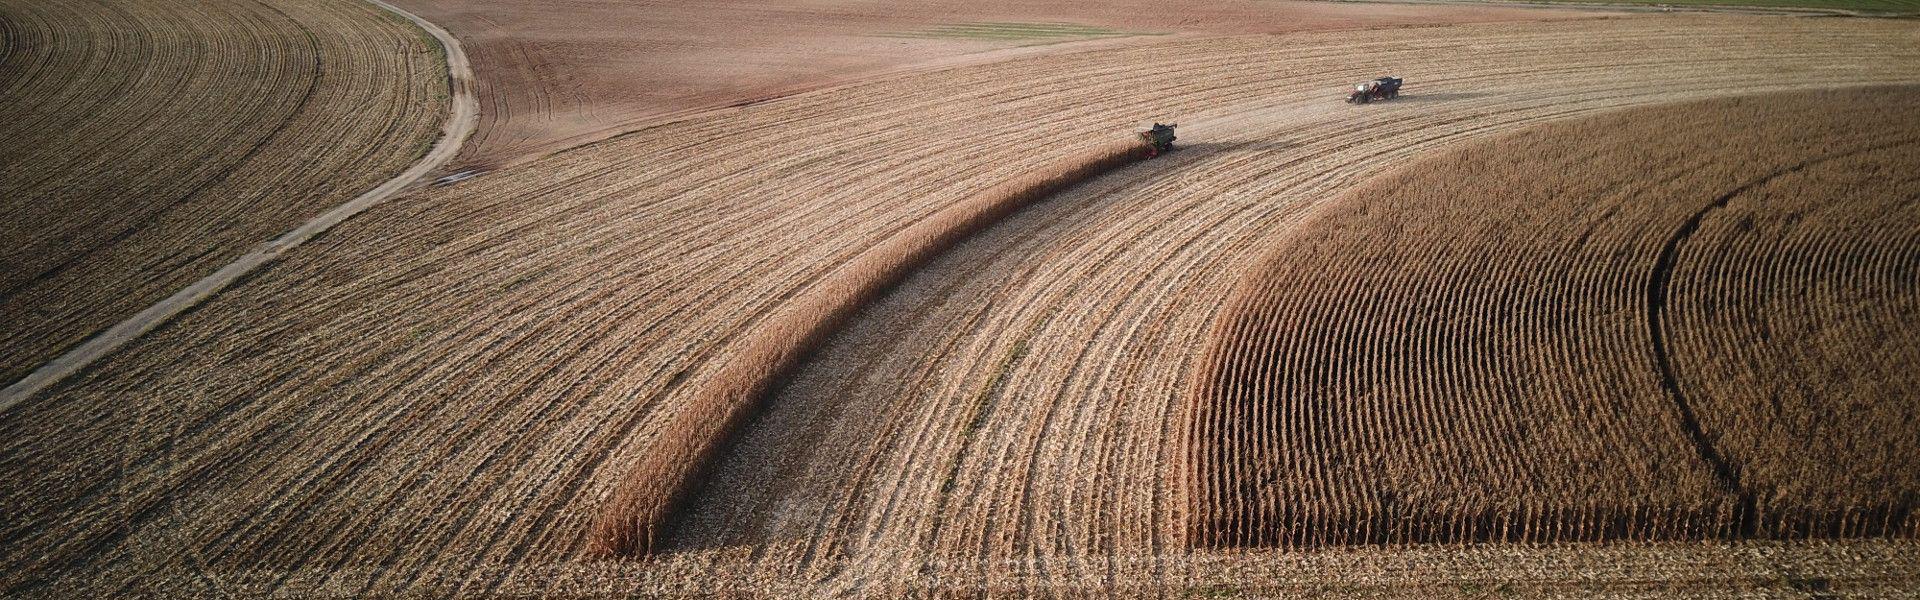 Imagen aérea cultivo maíz